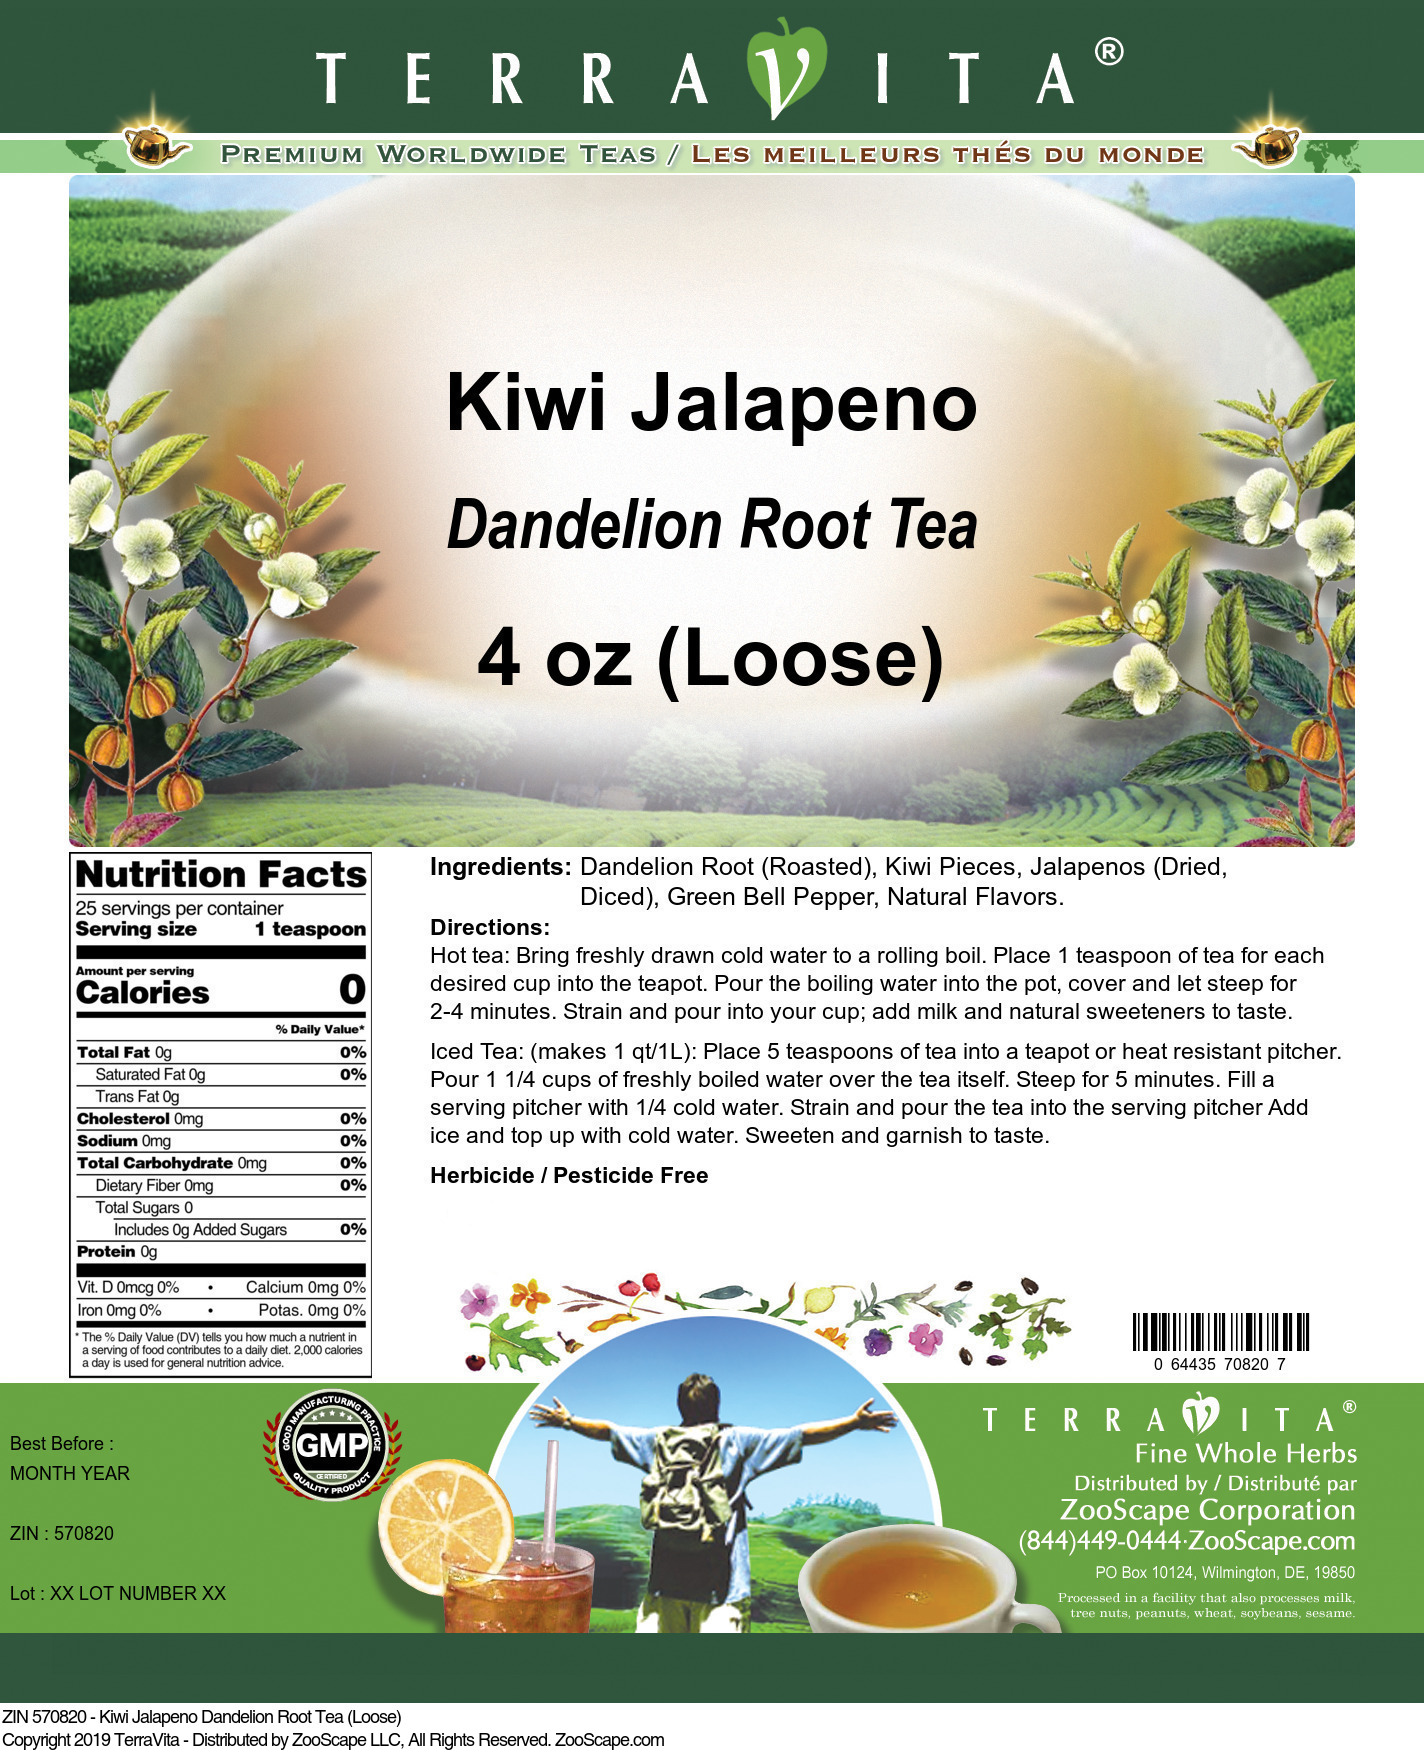 Kiwi Jalapeno Dandelion Root Tea (Loose) - Label